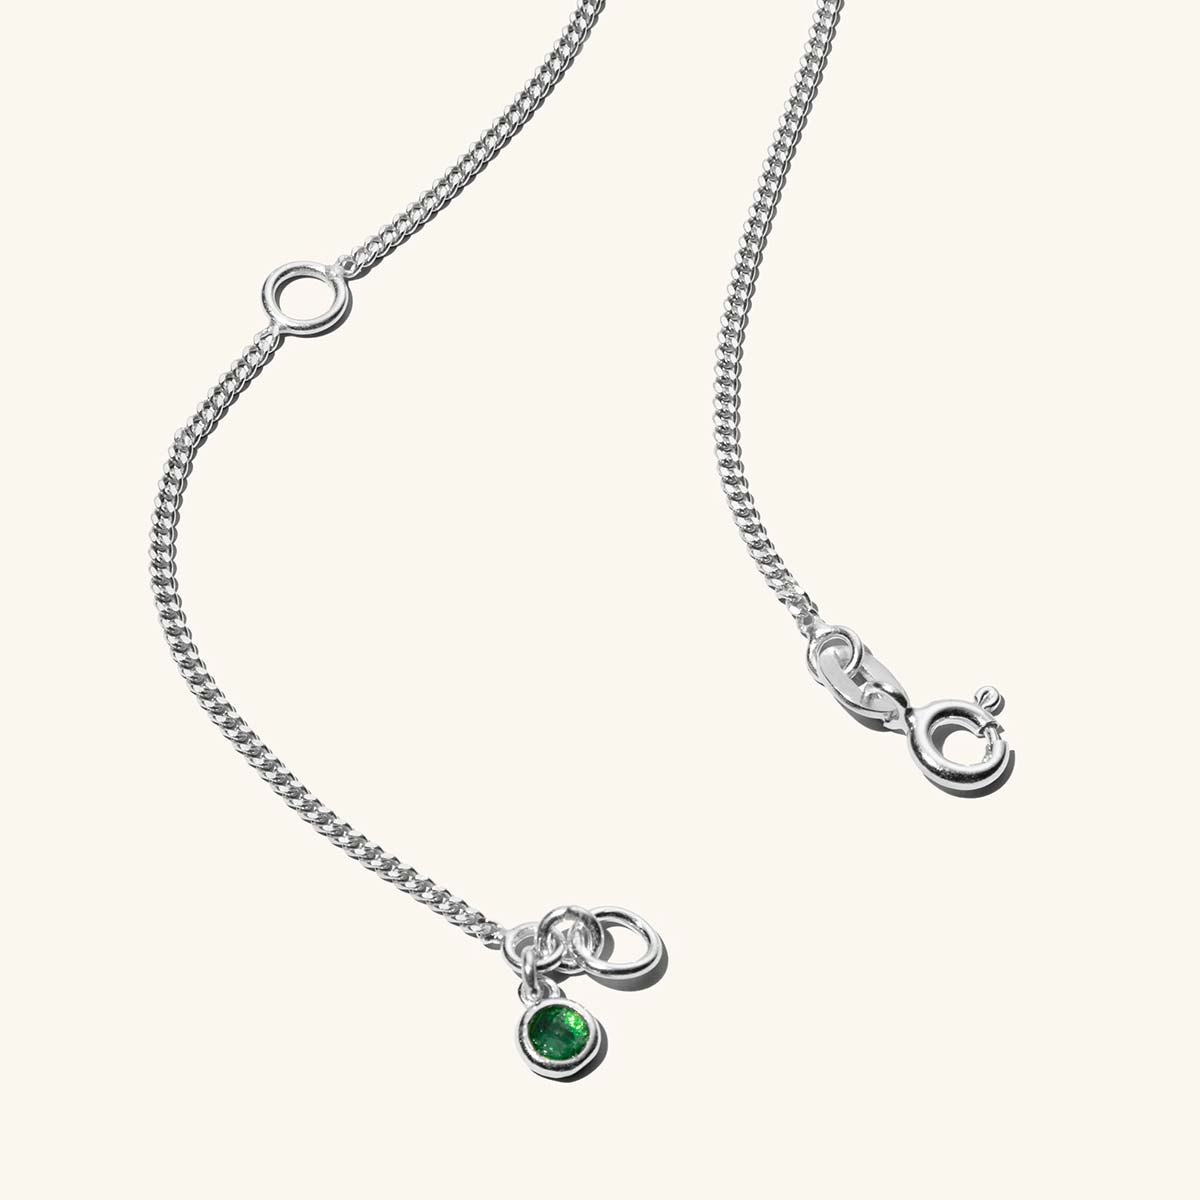 Men's Curb Chain Necklace - Silver | Vincero Collective